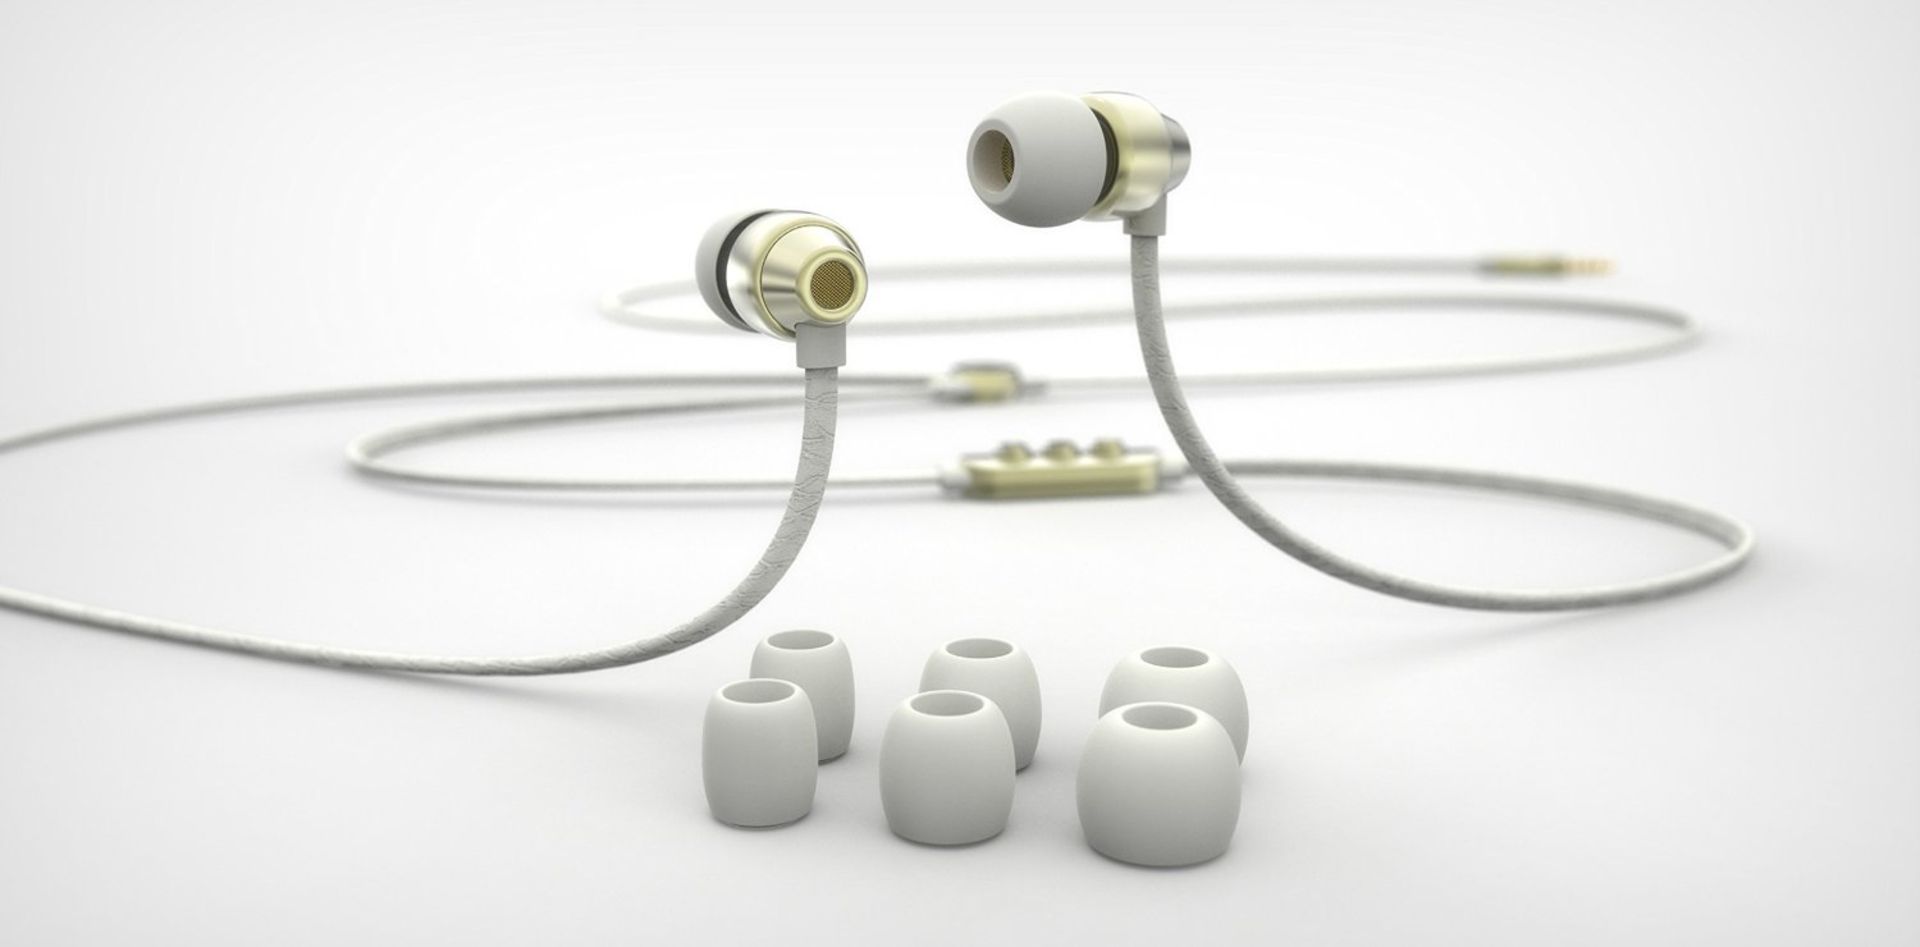 V Brand New Ted Baker Dover High Performance In-Ear Earphones White/Gold RRP £59.99 Amazon Price £ - Image 2 of 2